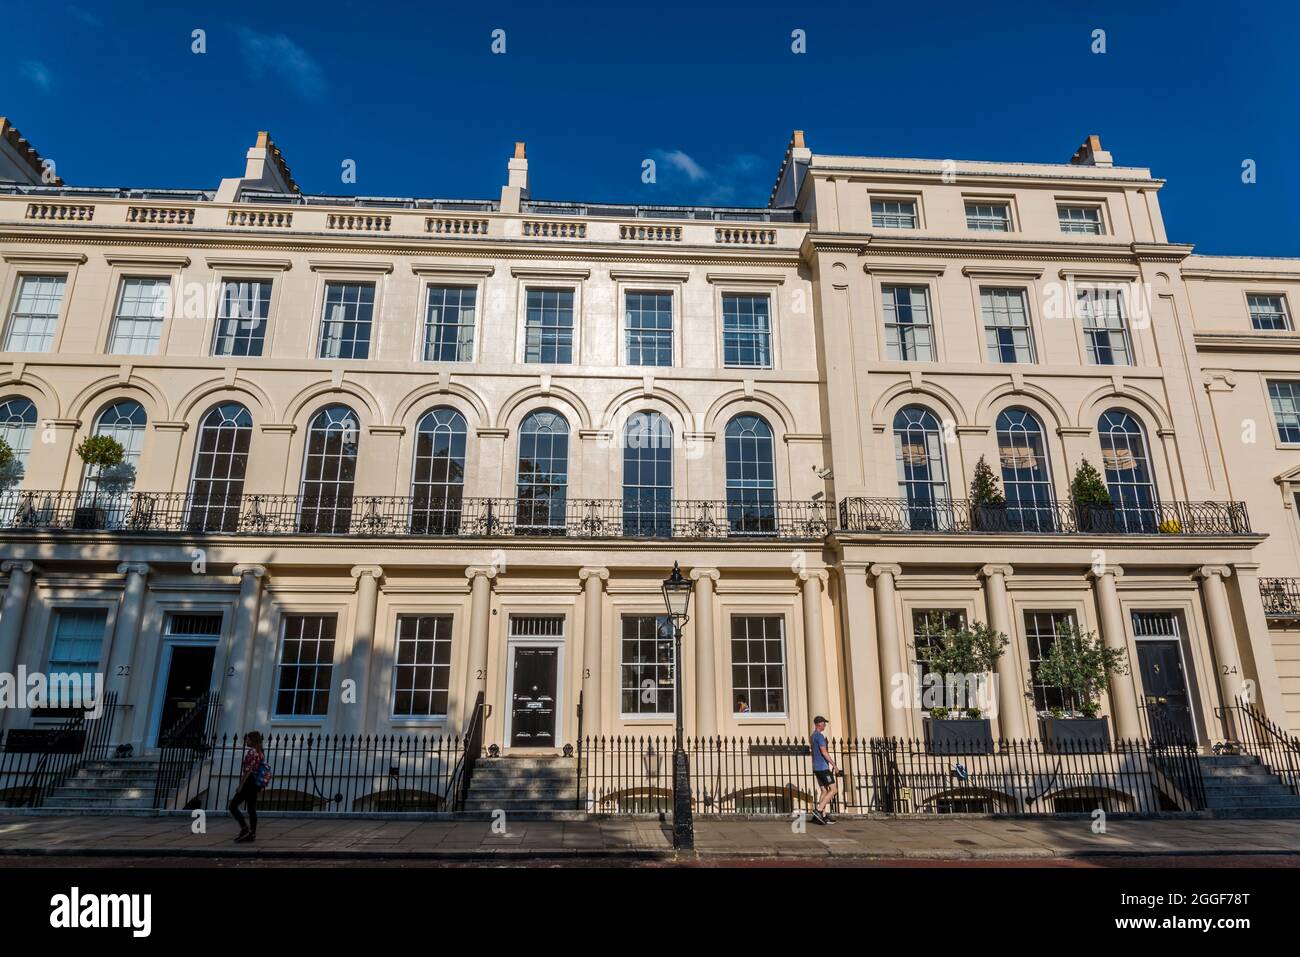 Row of elegant Georgian terraced properties, designed by John Nash, Park Square East, Regents Park, London, England UK Stock Photo